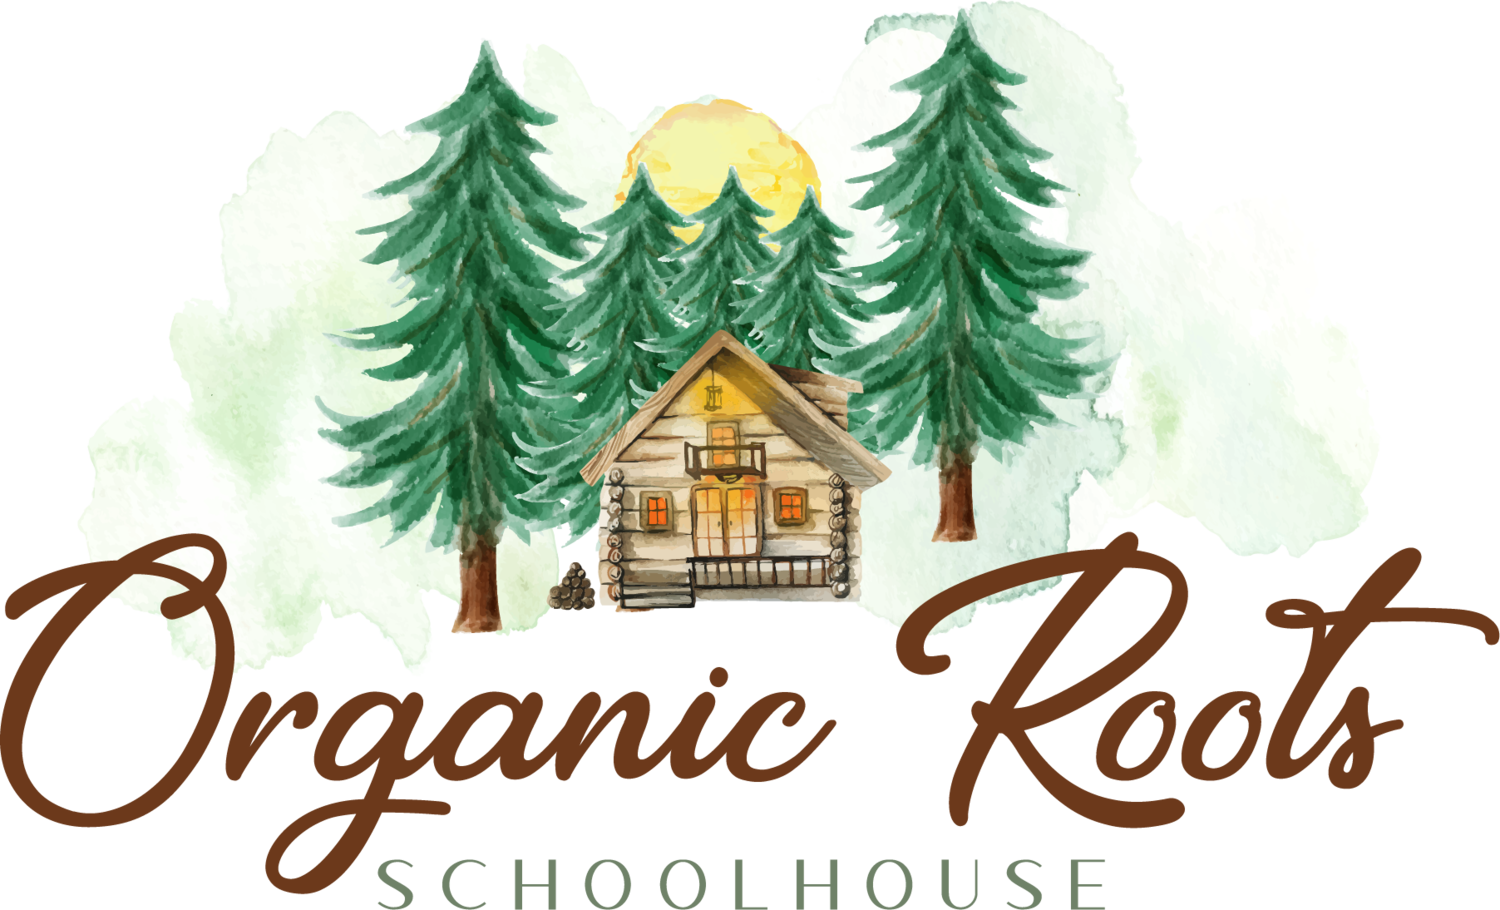 Organic Roots Schoolhouse